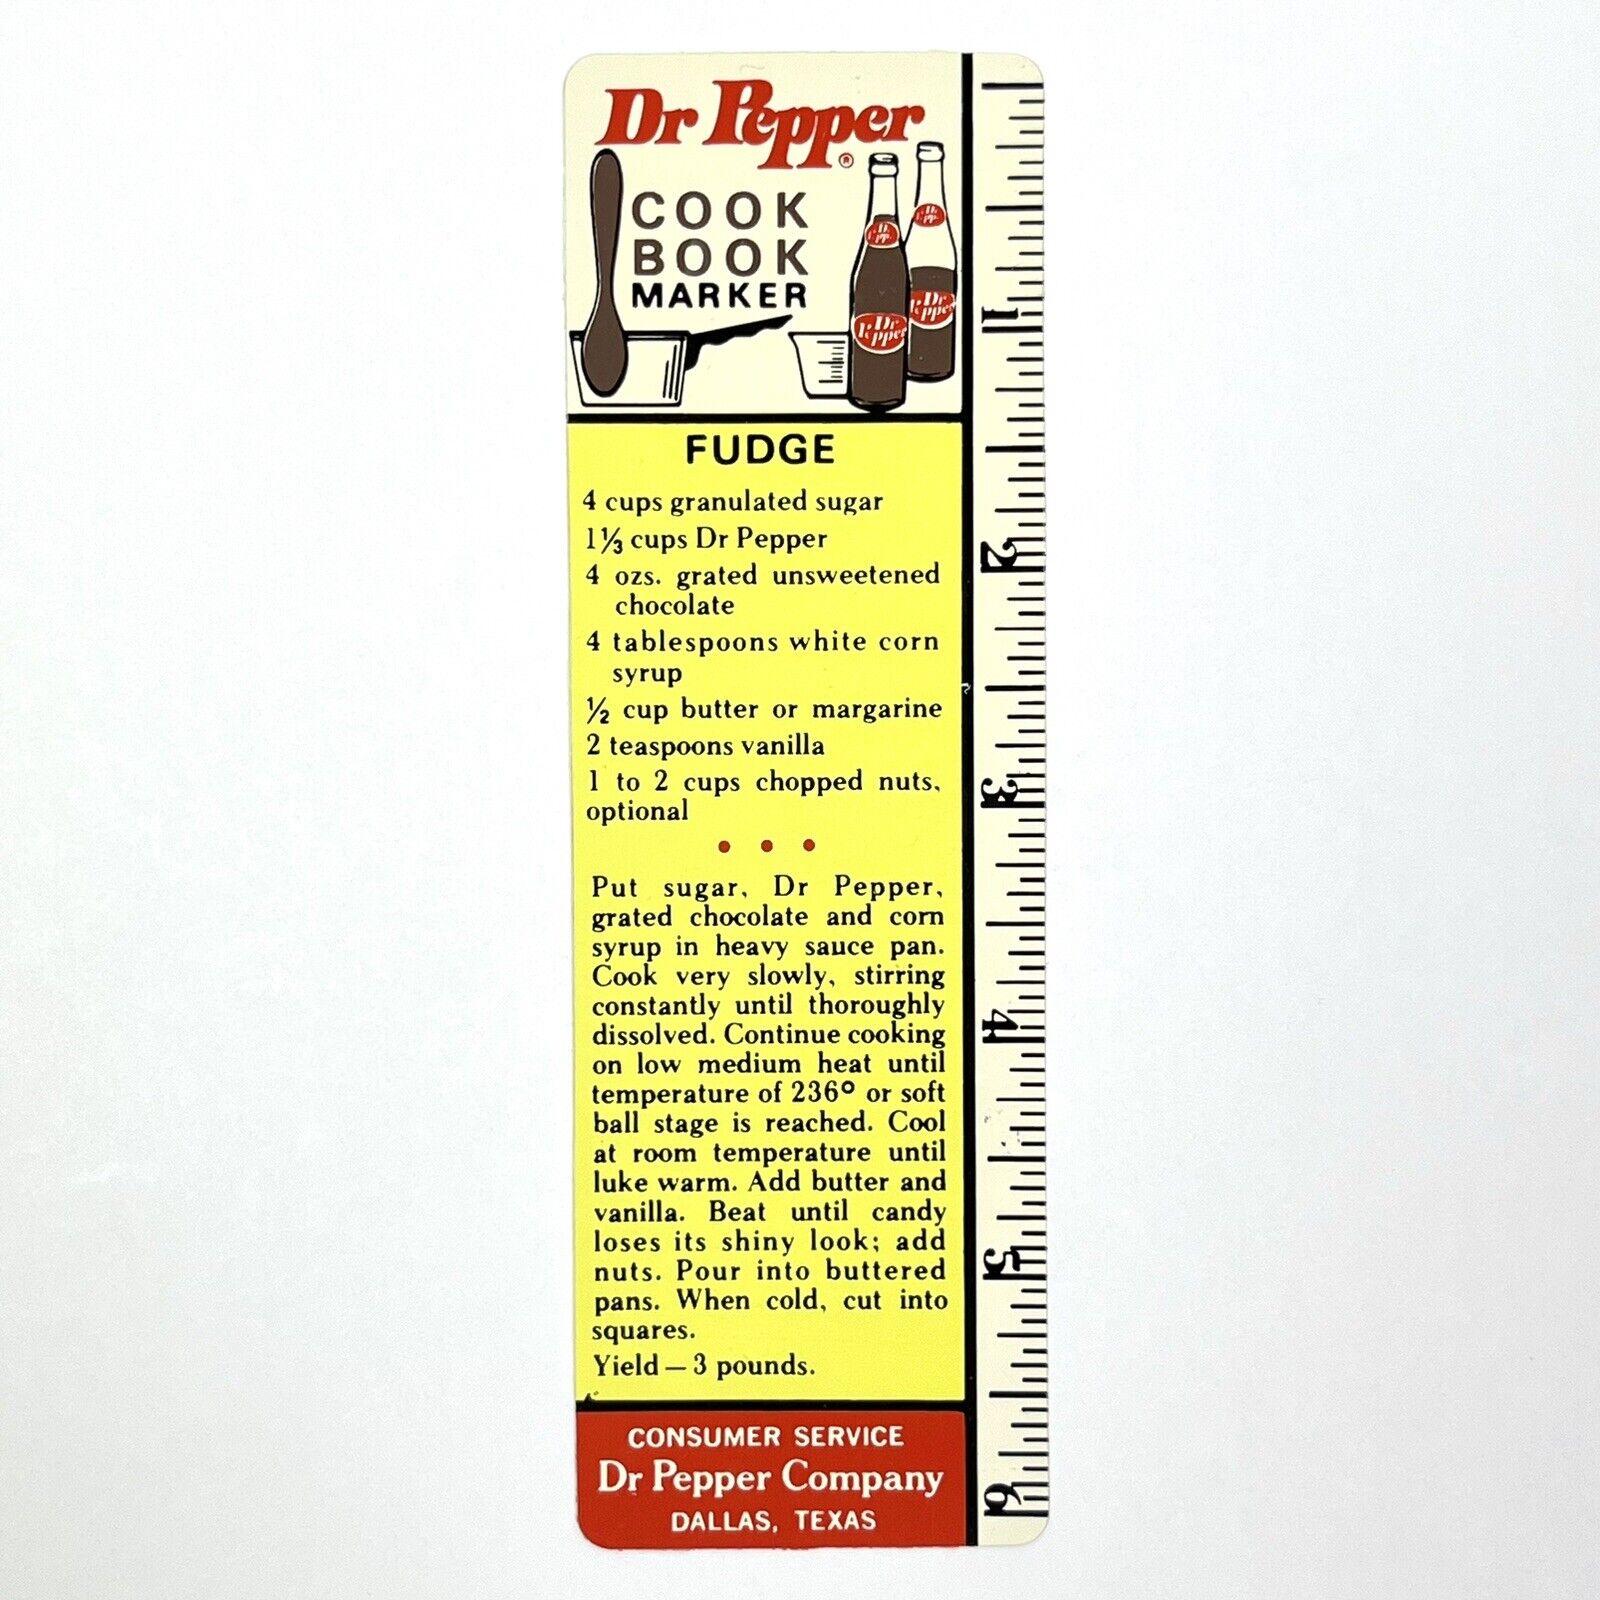 vintage DR PEPPER Cook Book Marker FUDGE Ruler recipe - Consumer Service, Dallas